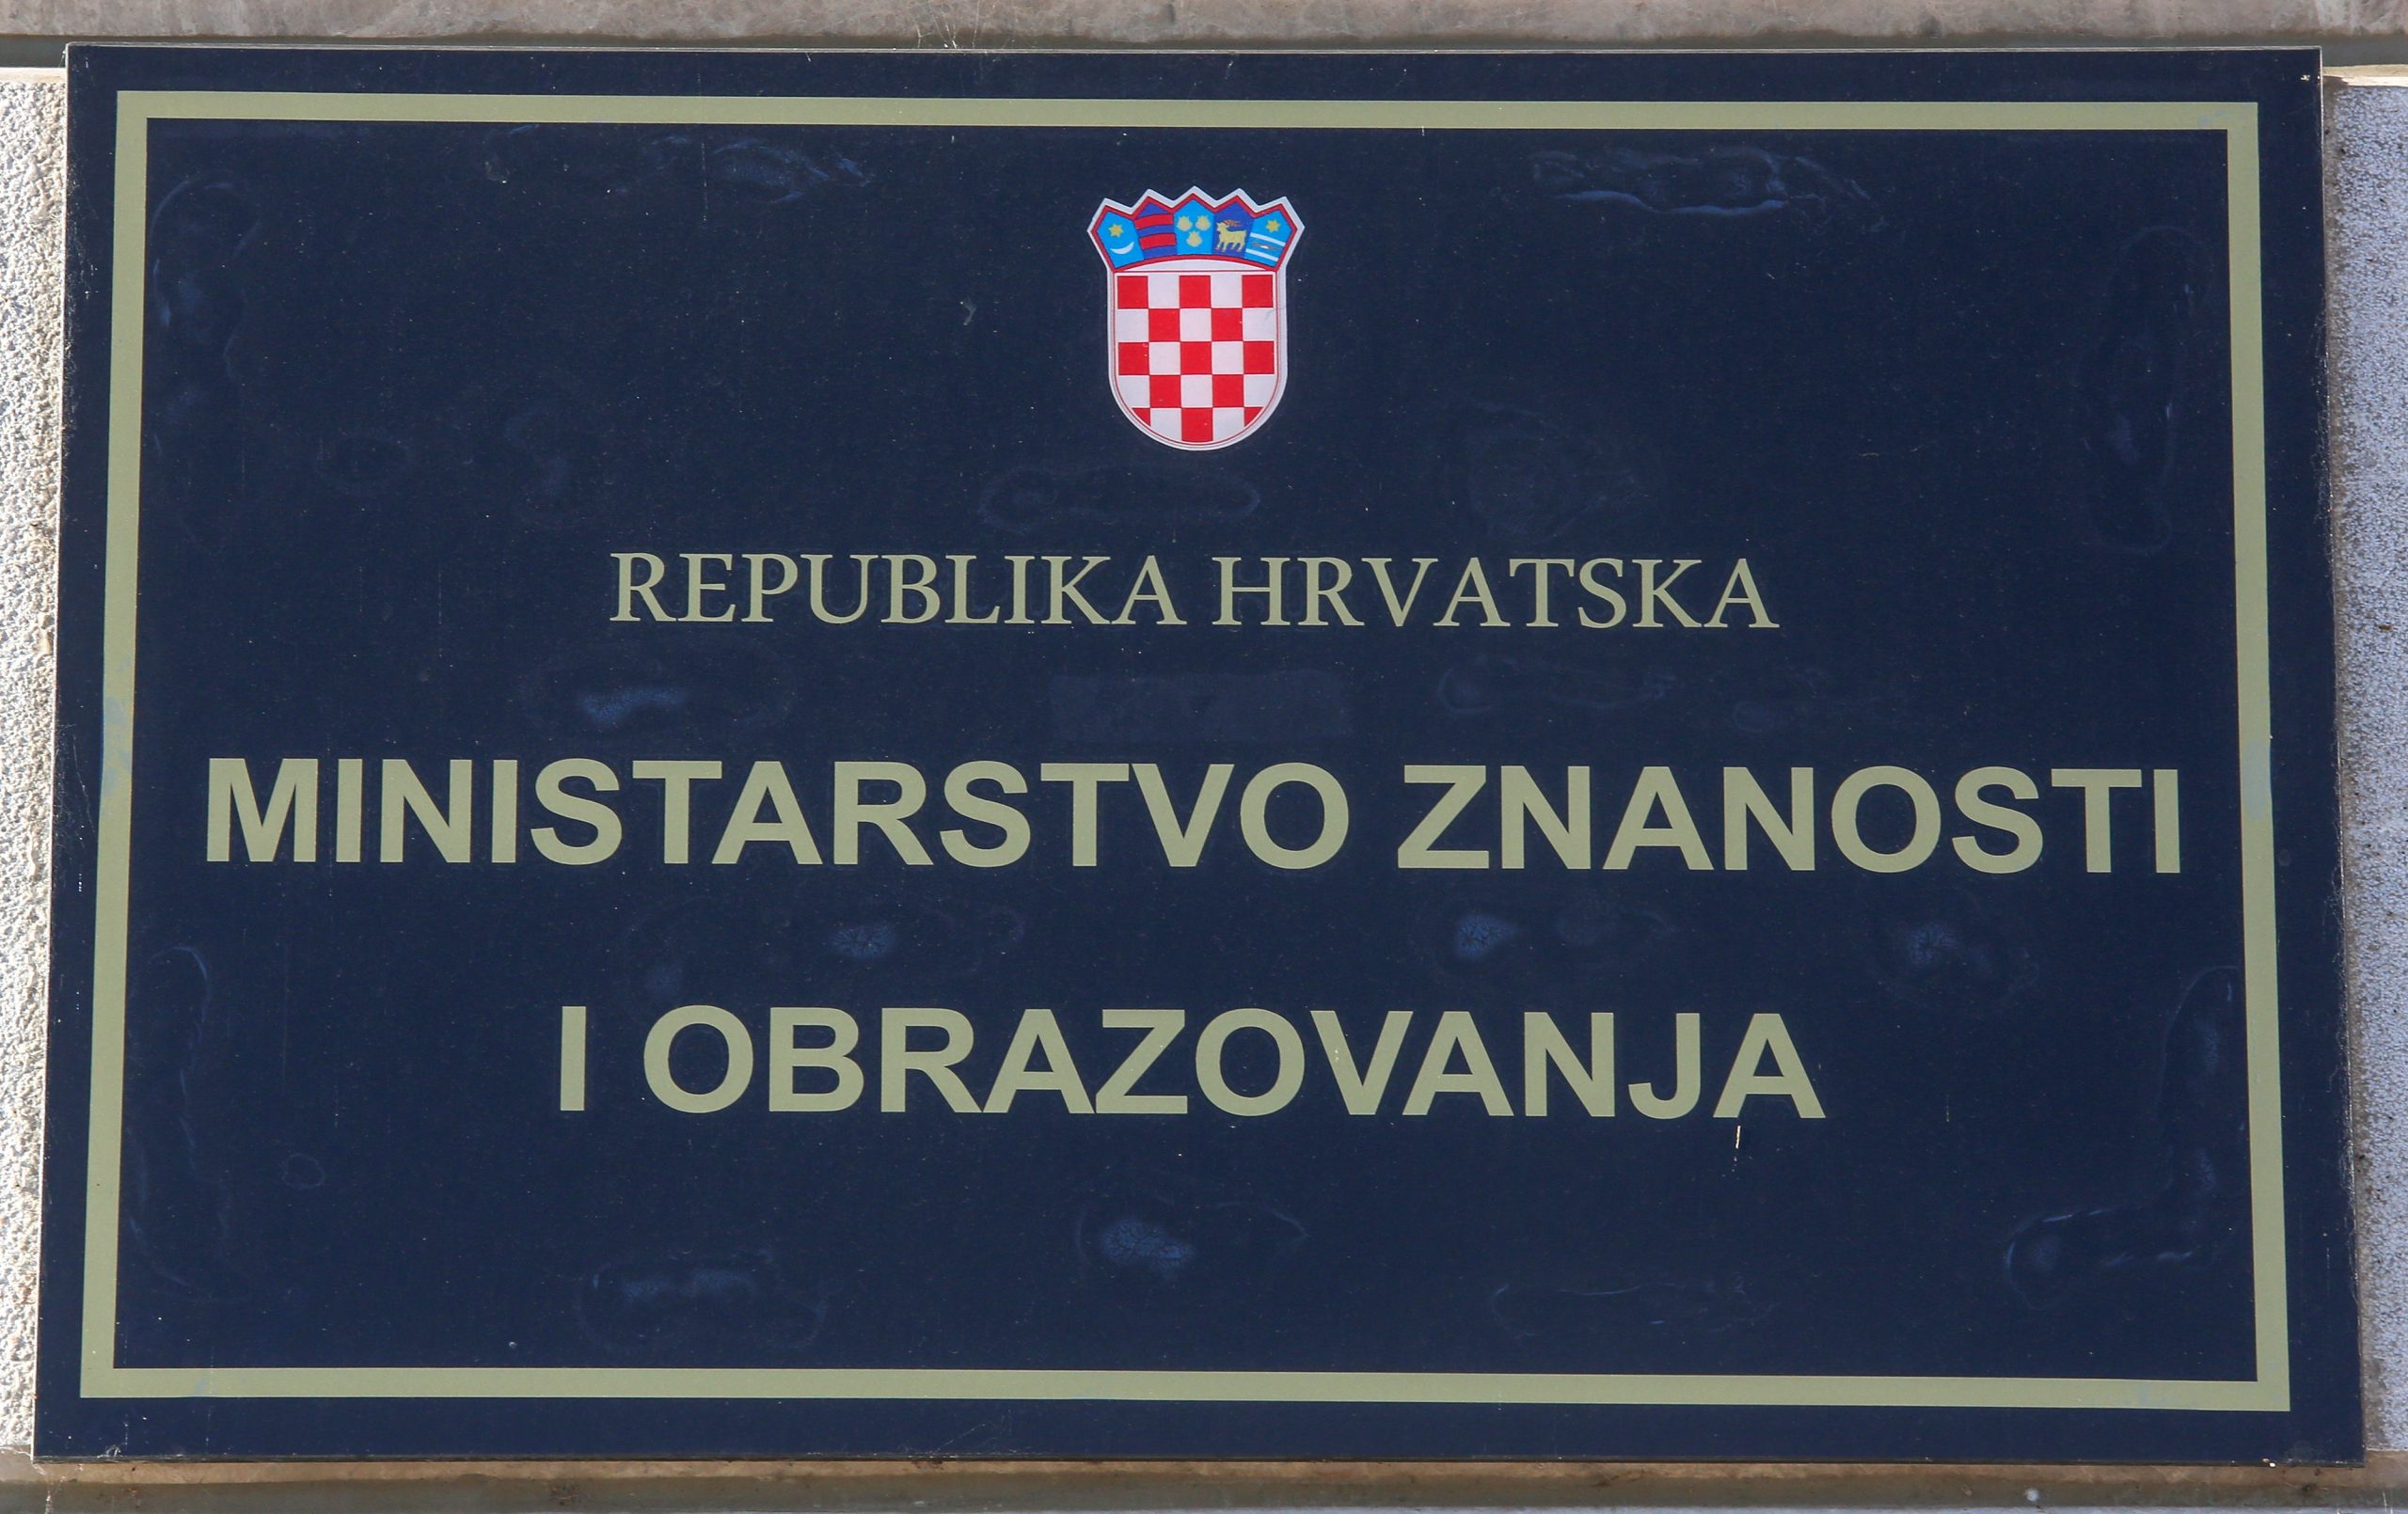 Zagreb: Ministarstvo znanosti i obrazovanja 15.01.2019., Zagreb - Ministarstvo znanosti i obrazovanja.
Photo: Matija Habljak/PIXSELL